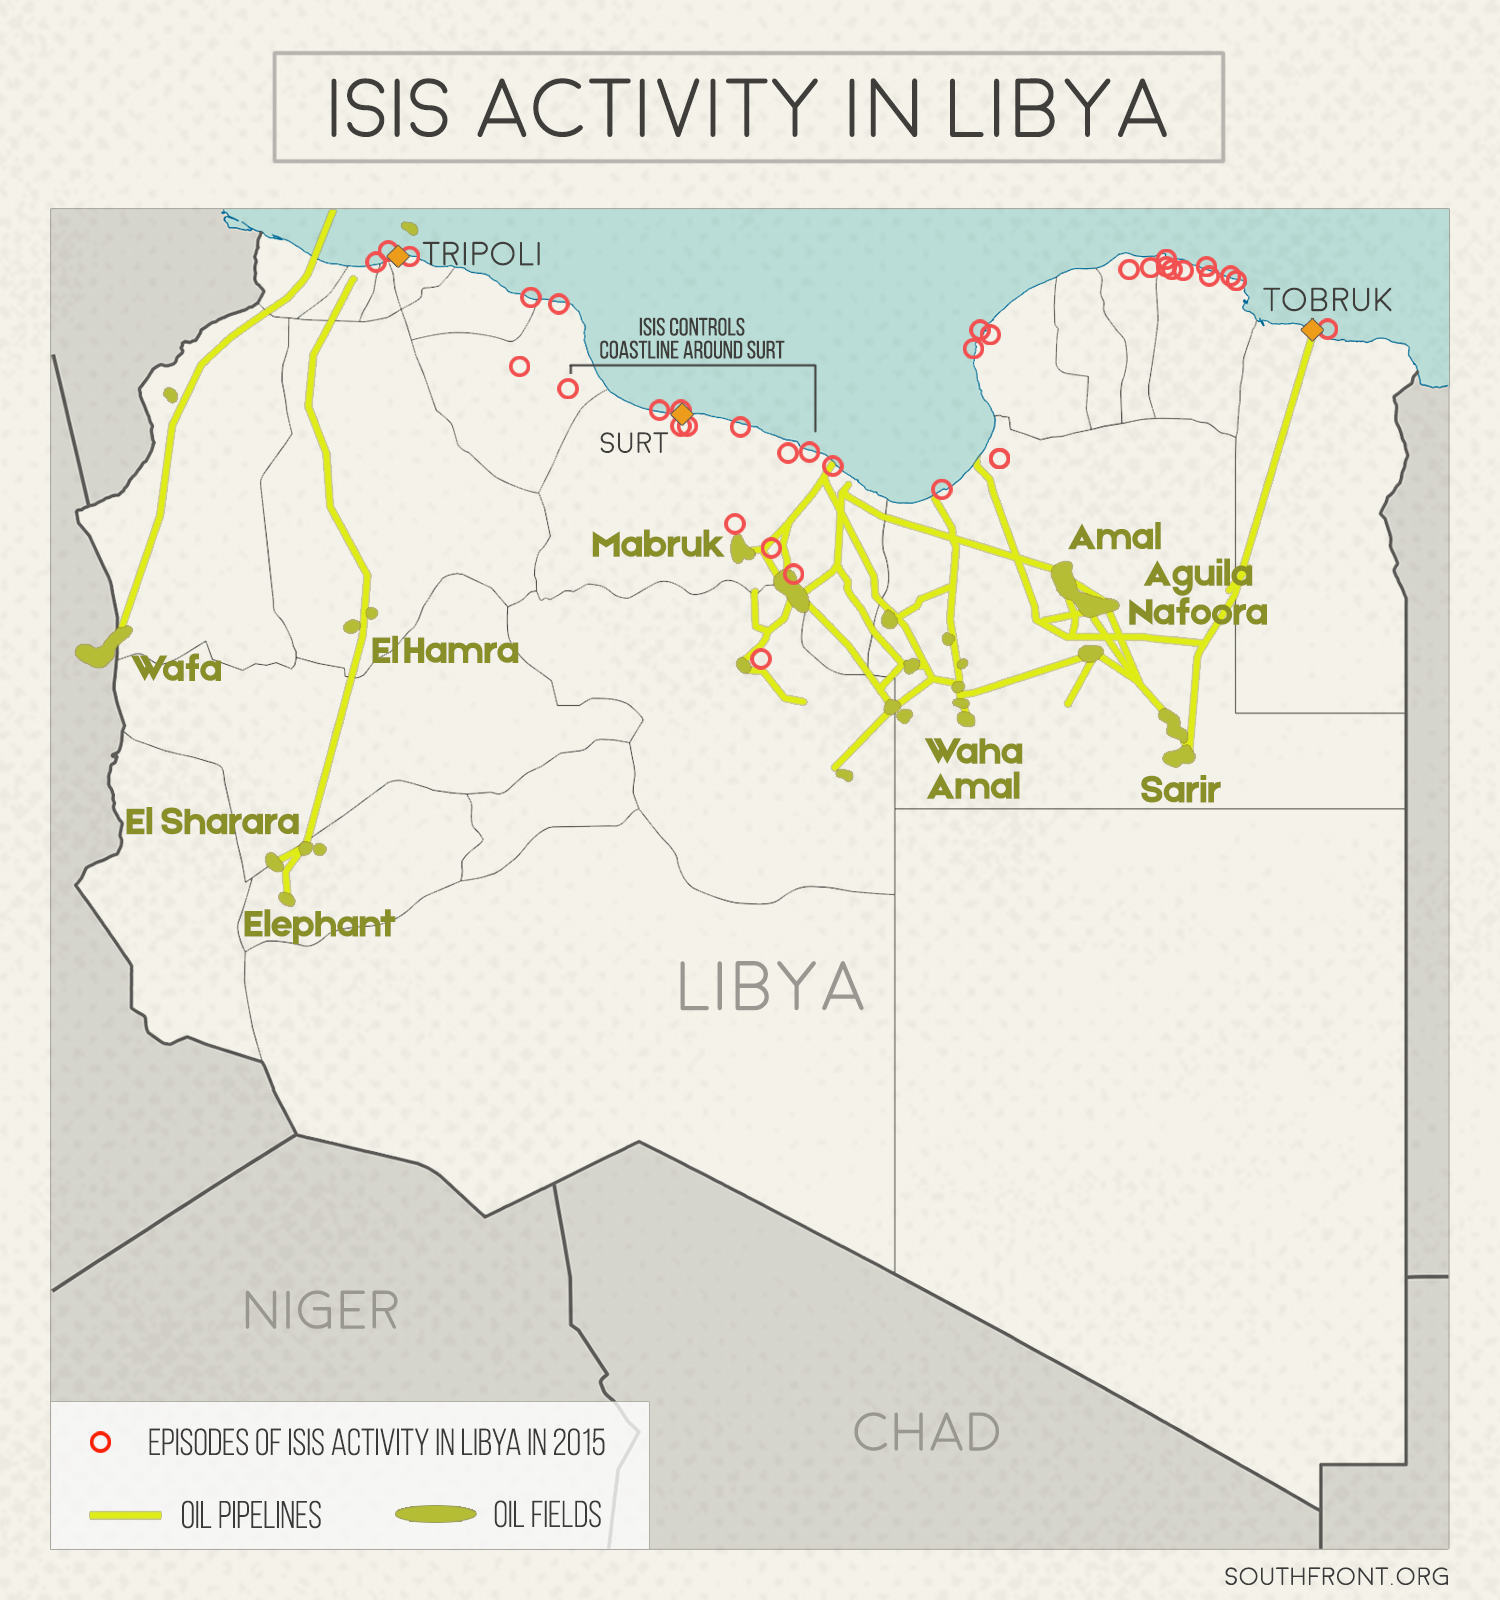 Libya: ISIS Activity & Oil Pipelines